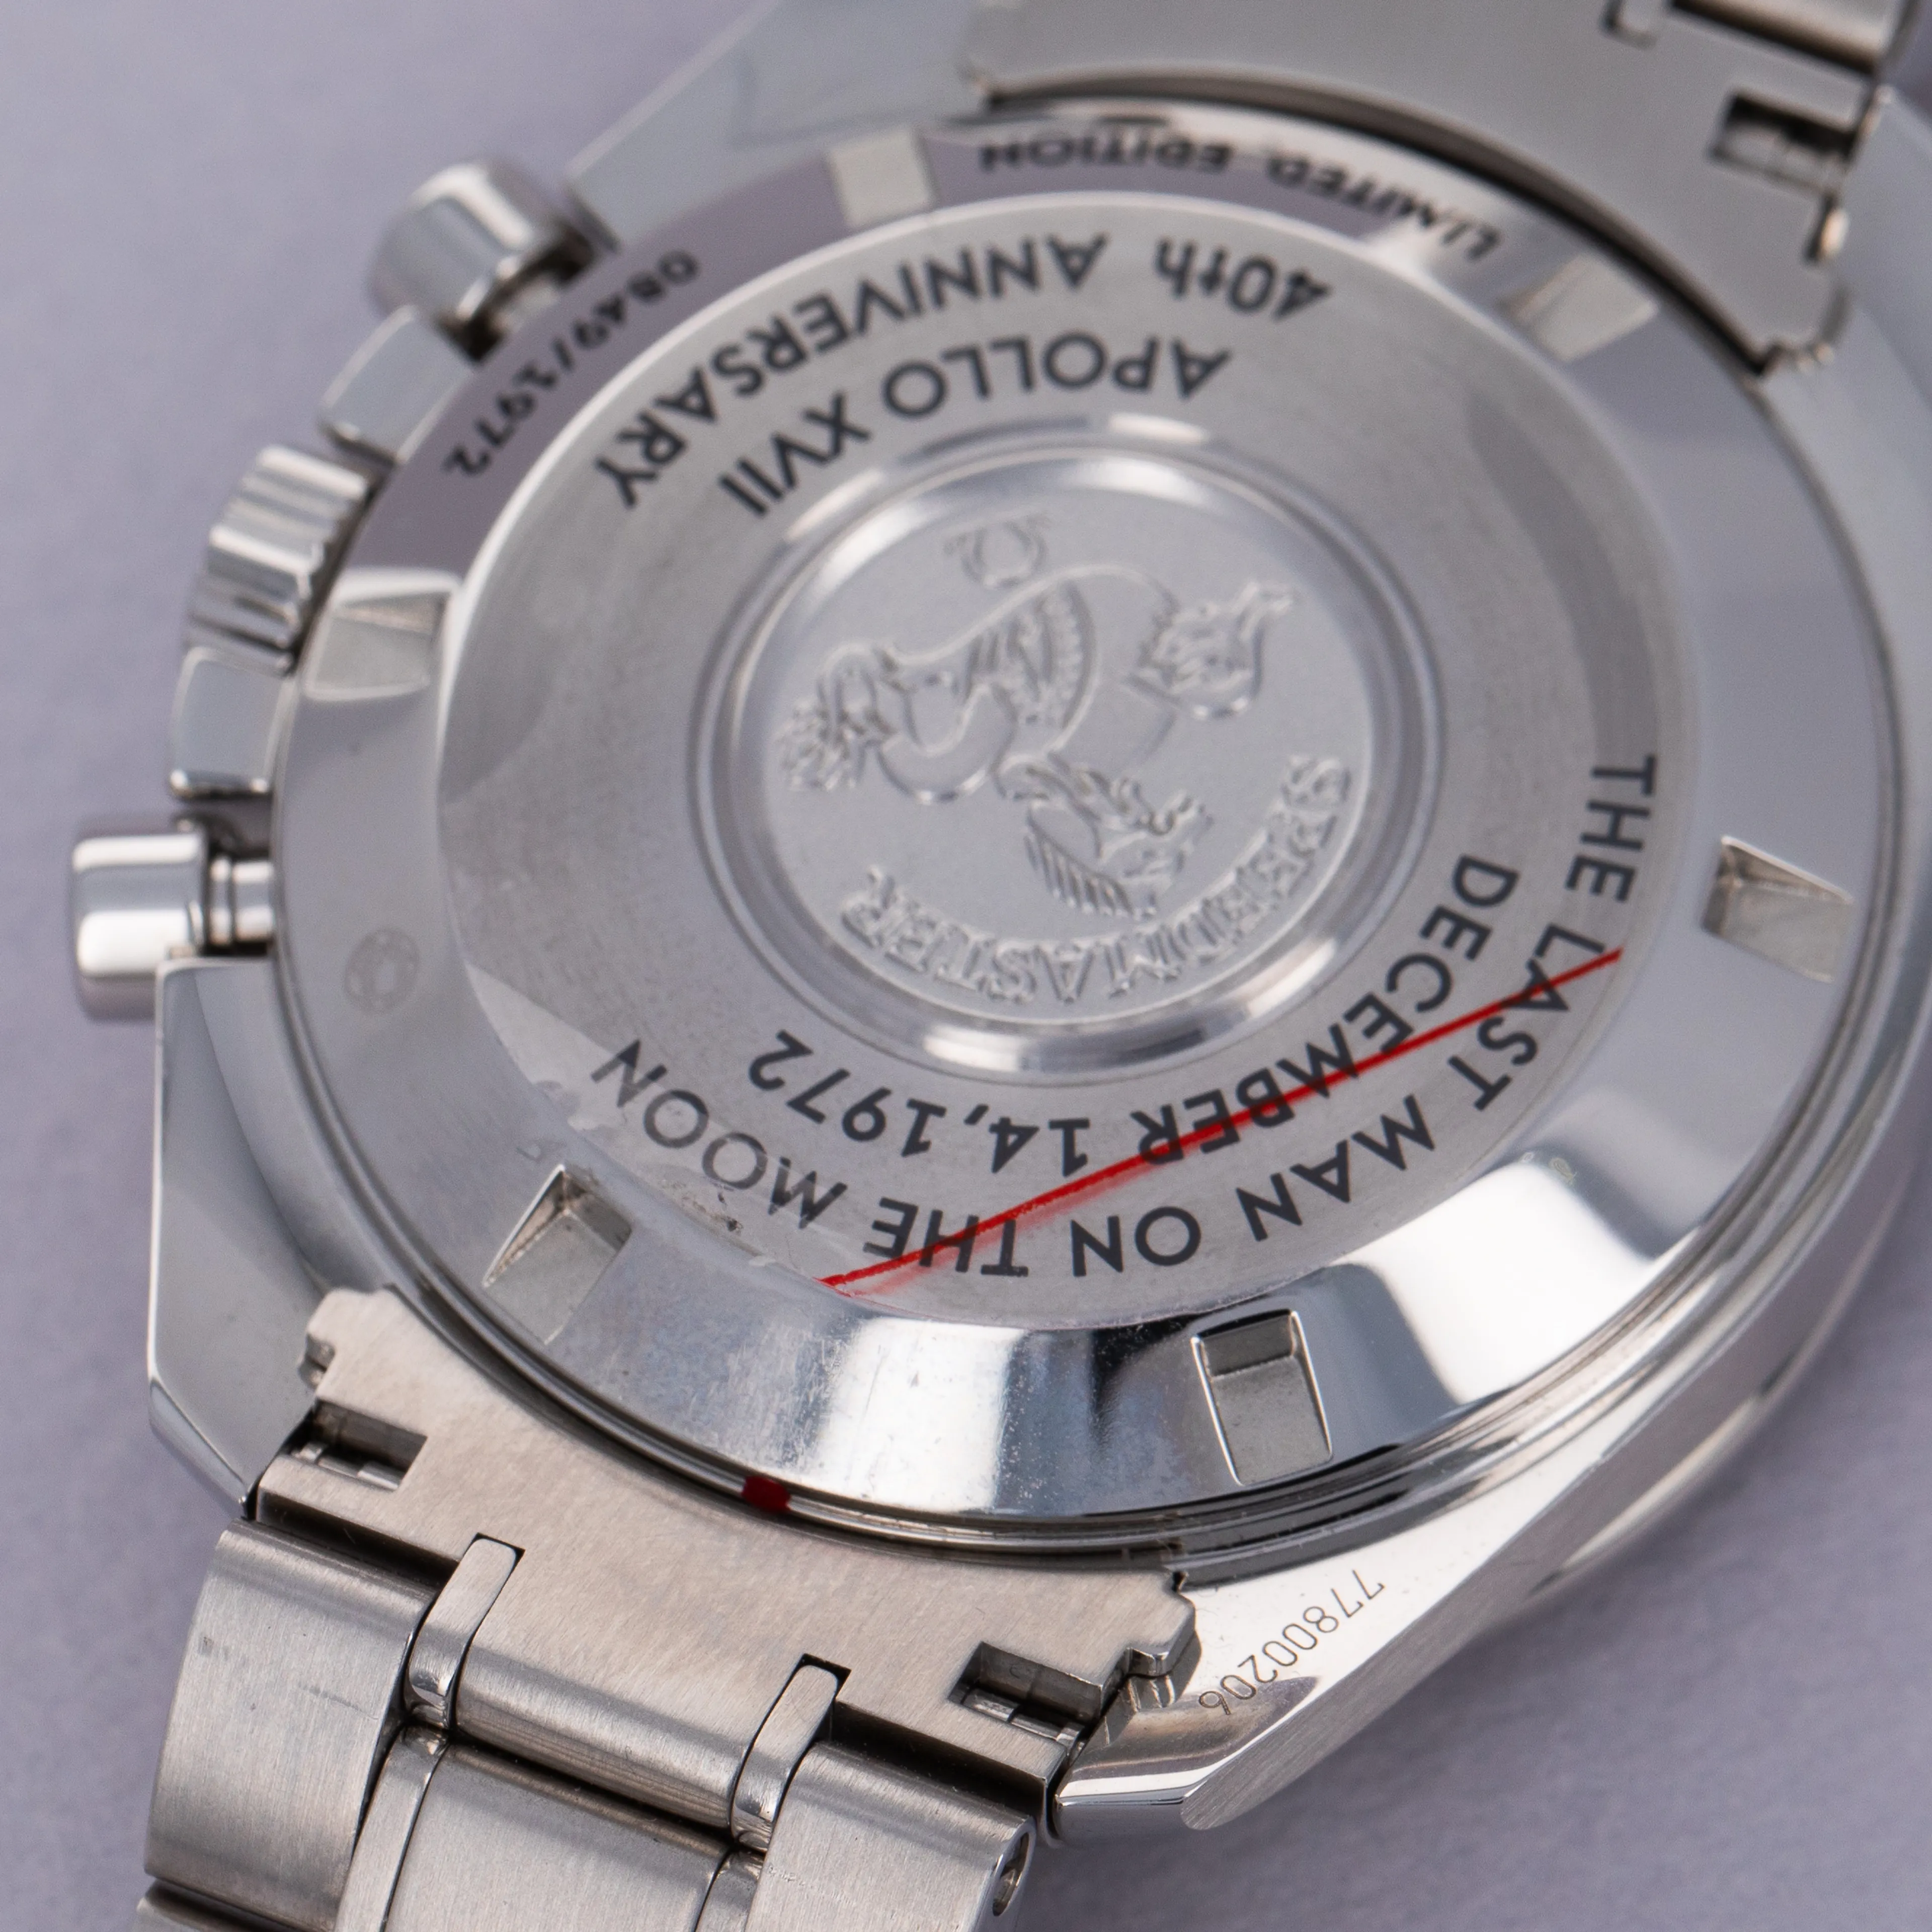 Omega Speedmaster Moon watch 311.30.42.30.99.002 42mm Stainless steel Silver 1